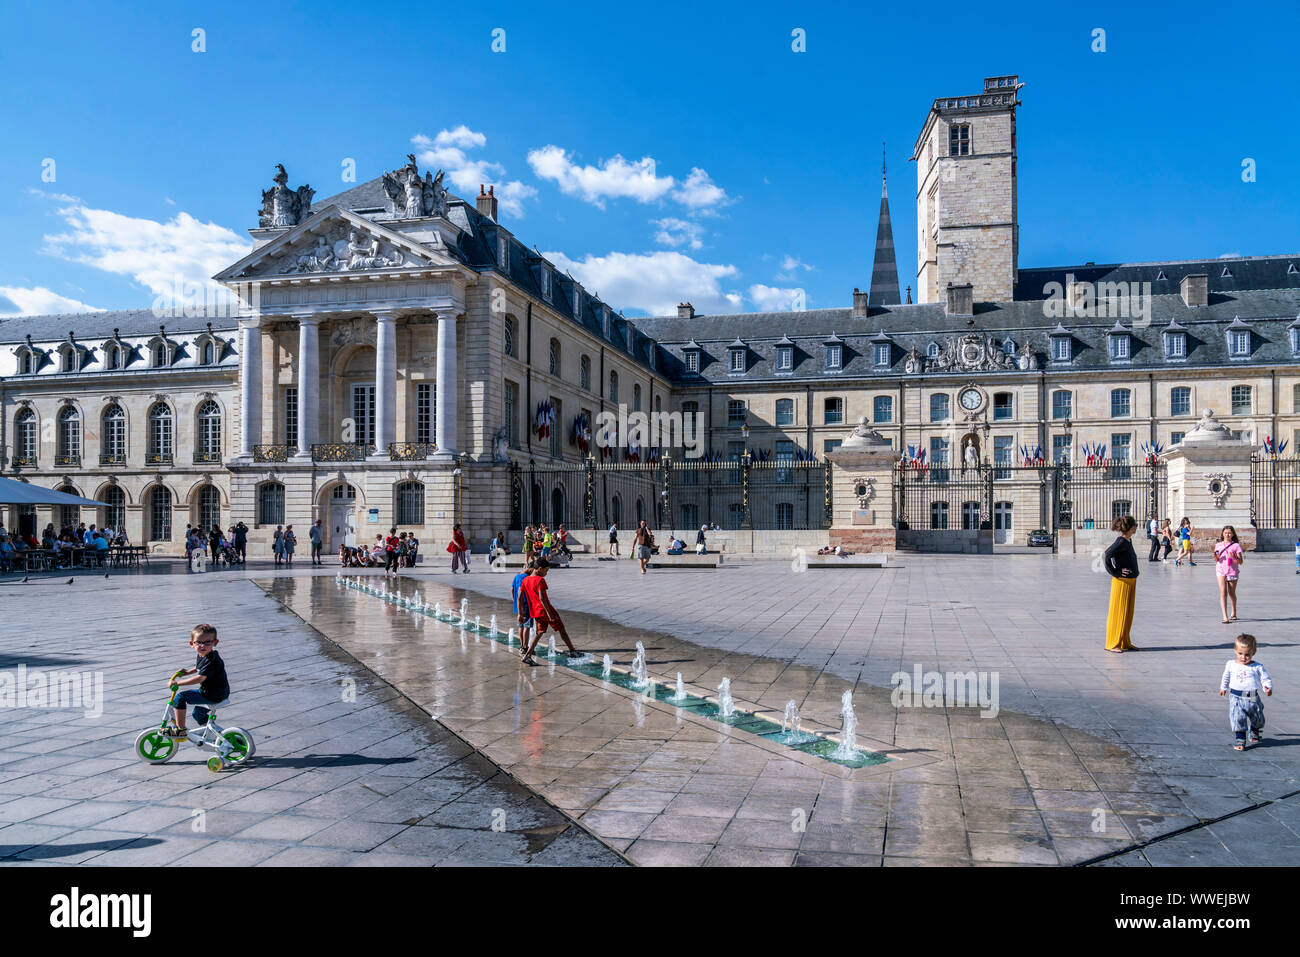 Bambini che giocano con le fontane sulla Place de la Libération, Le Palais des Ducs de Bourgogne, ducs palace, Dijon, Borgogna, Francia, Foto Stock